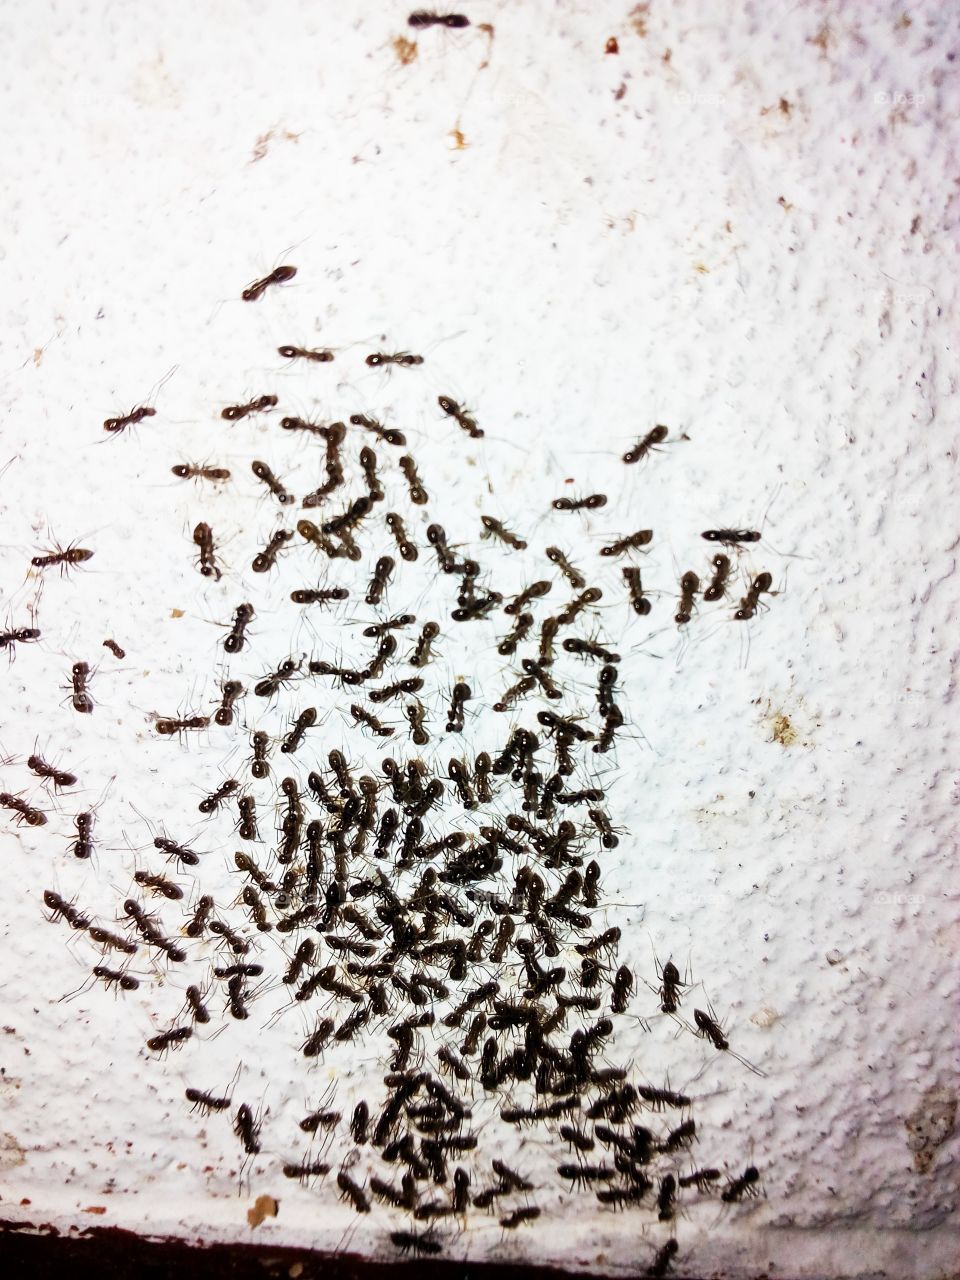 ant meeting